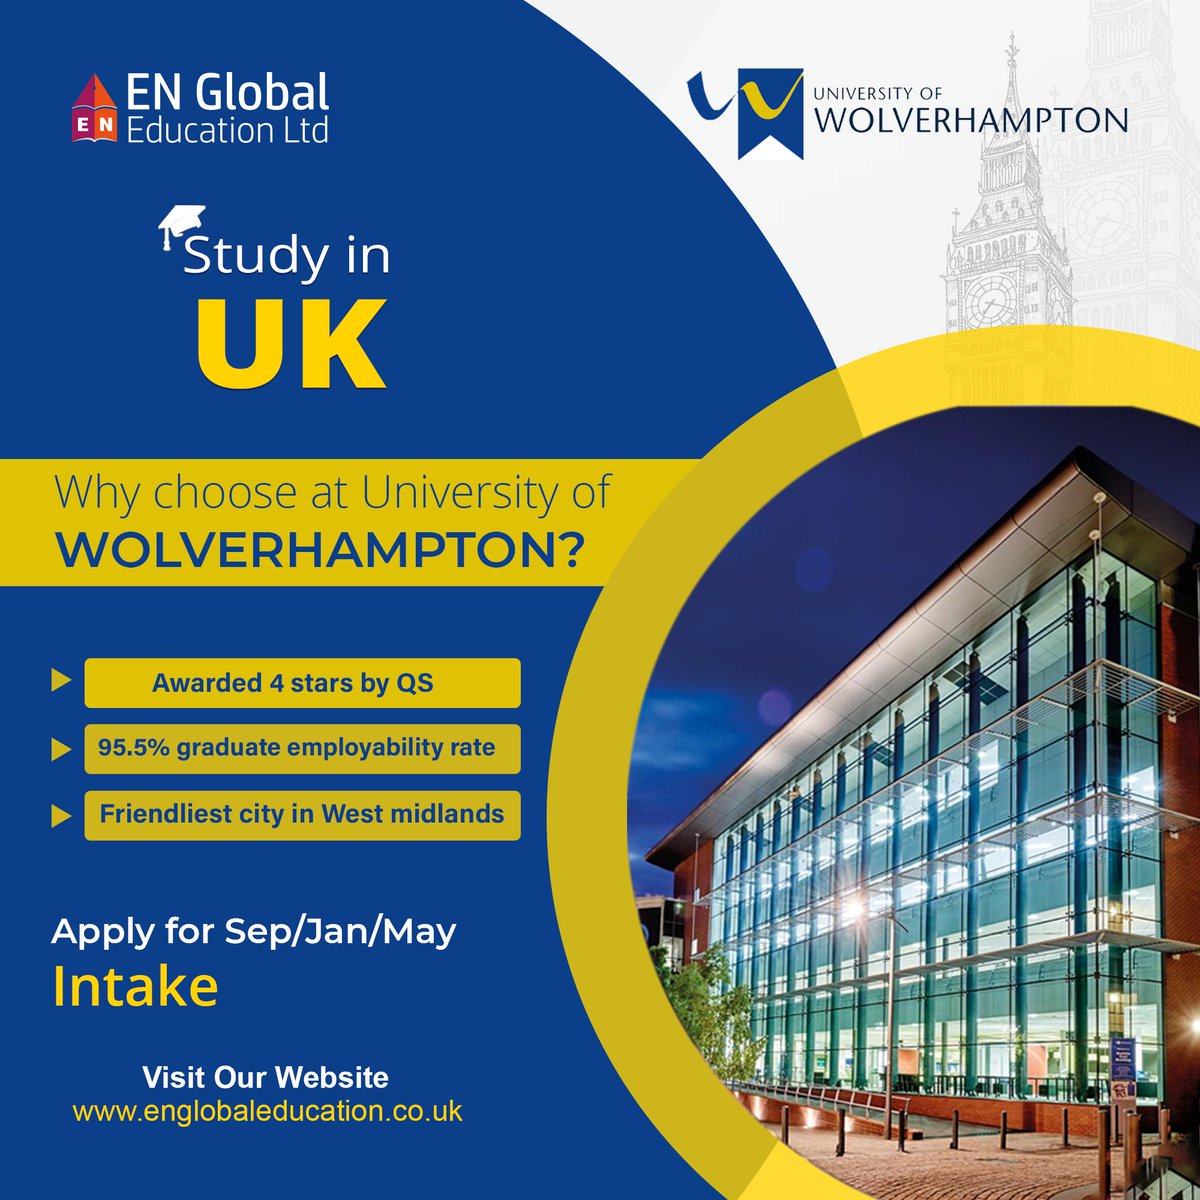 Study at the University of Wolverhampton‼️

#wolverhampton
#studyinuk #studyinukwithoutielts #uk #liveinuk #education #studyabroad #ielts #bachelor #masters #workinuk #liveinuk #psw #pswuk #students #learning #immigration #englobaleducationltd #englobaleducationindia #englobal